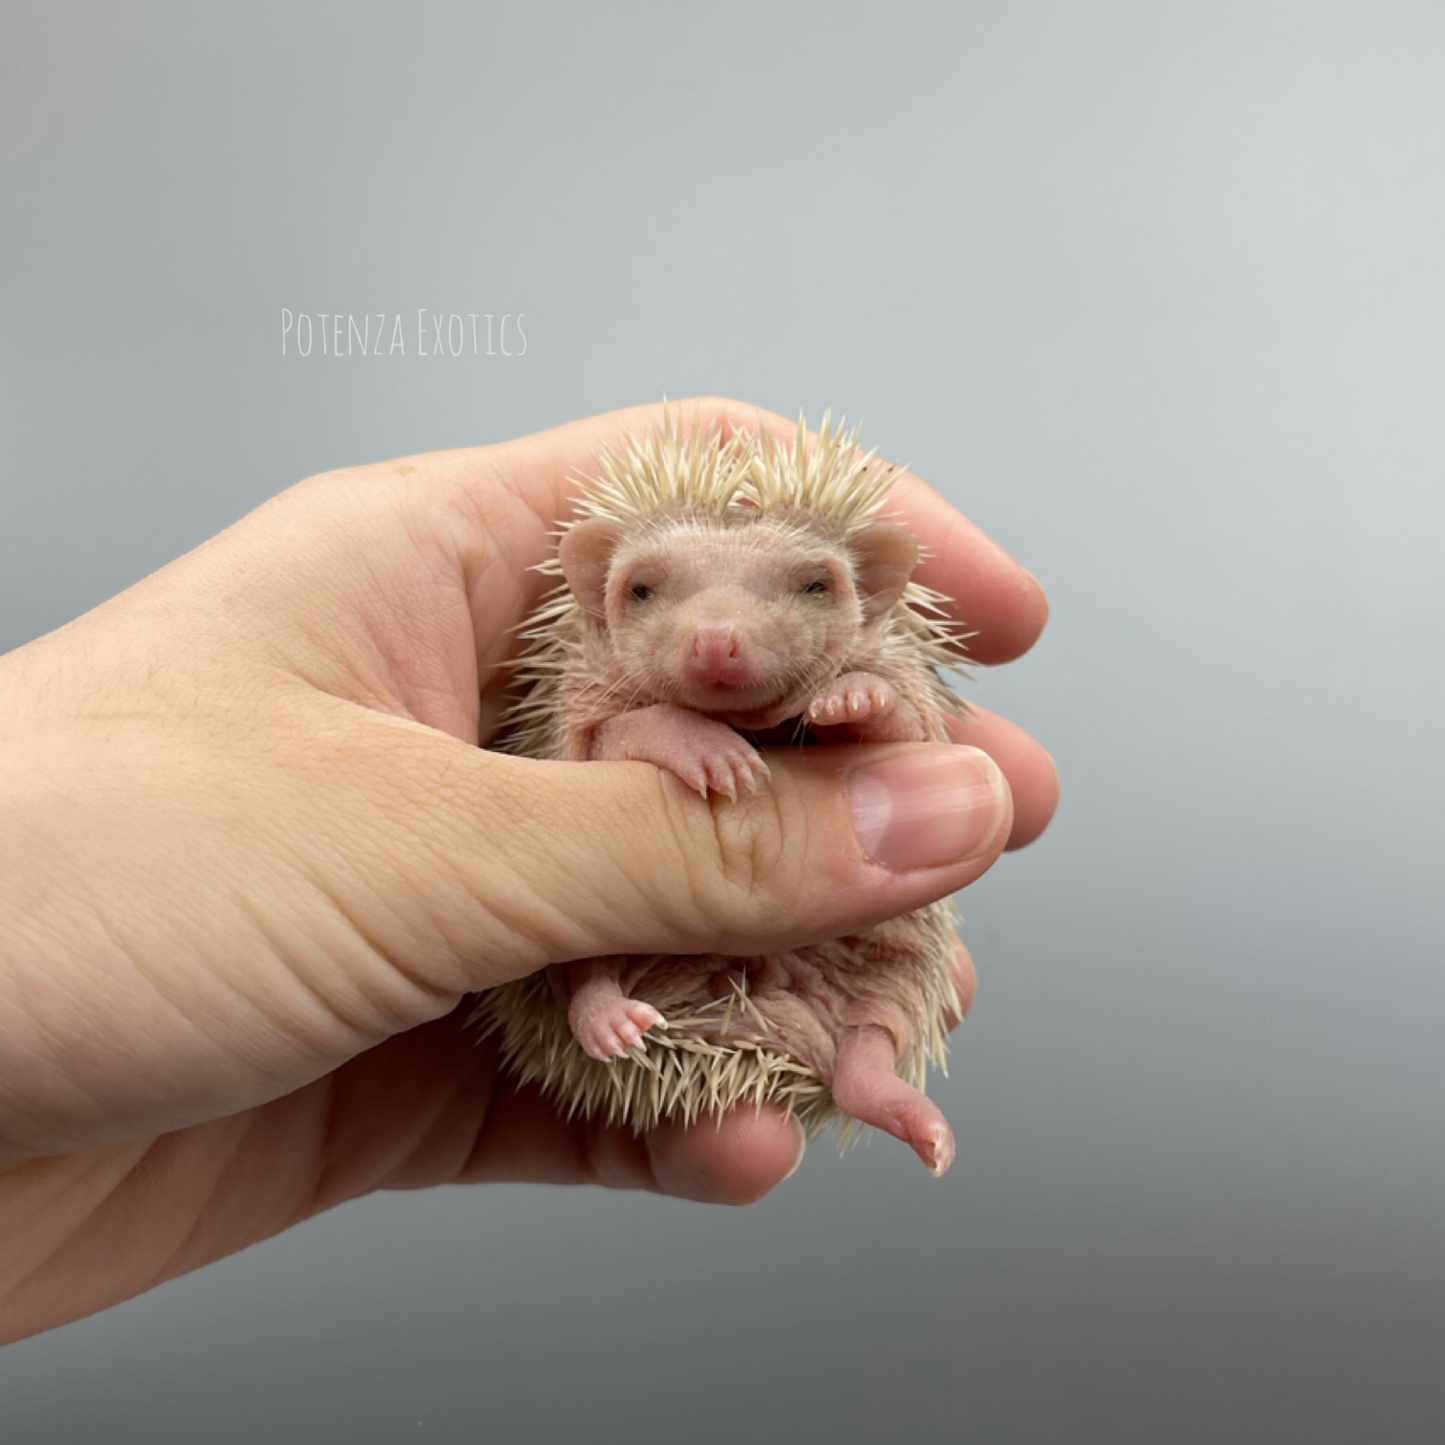 Potenza Exotics Hedgehog for Sale